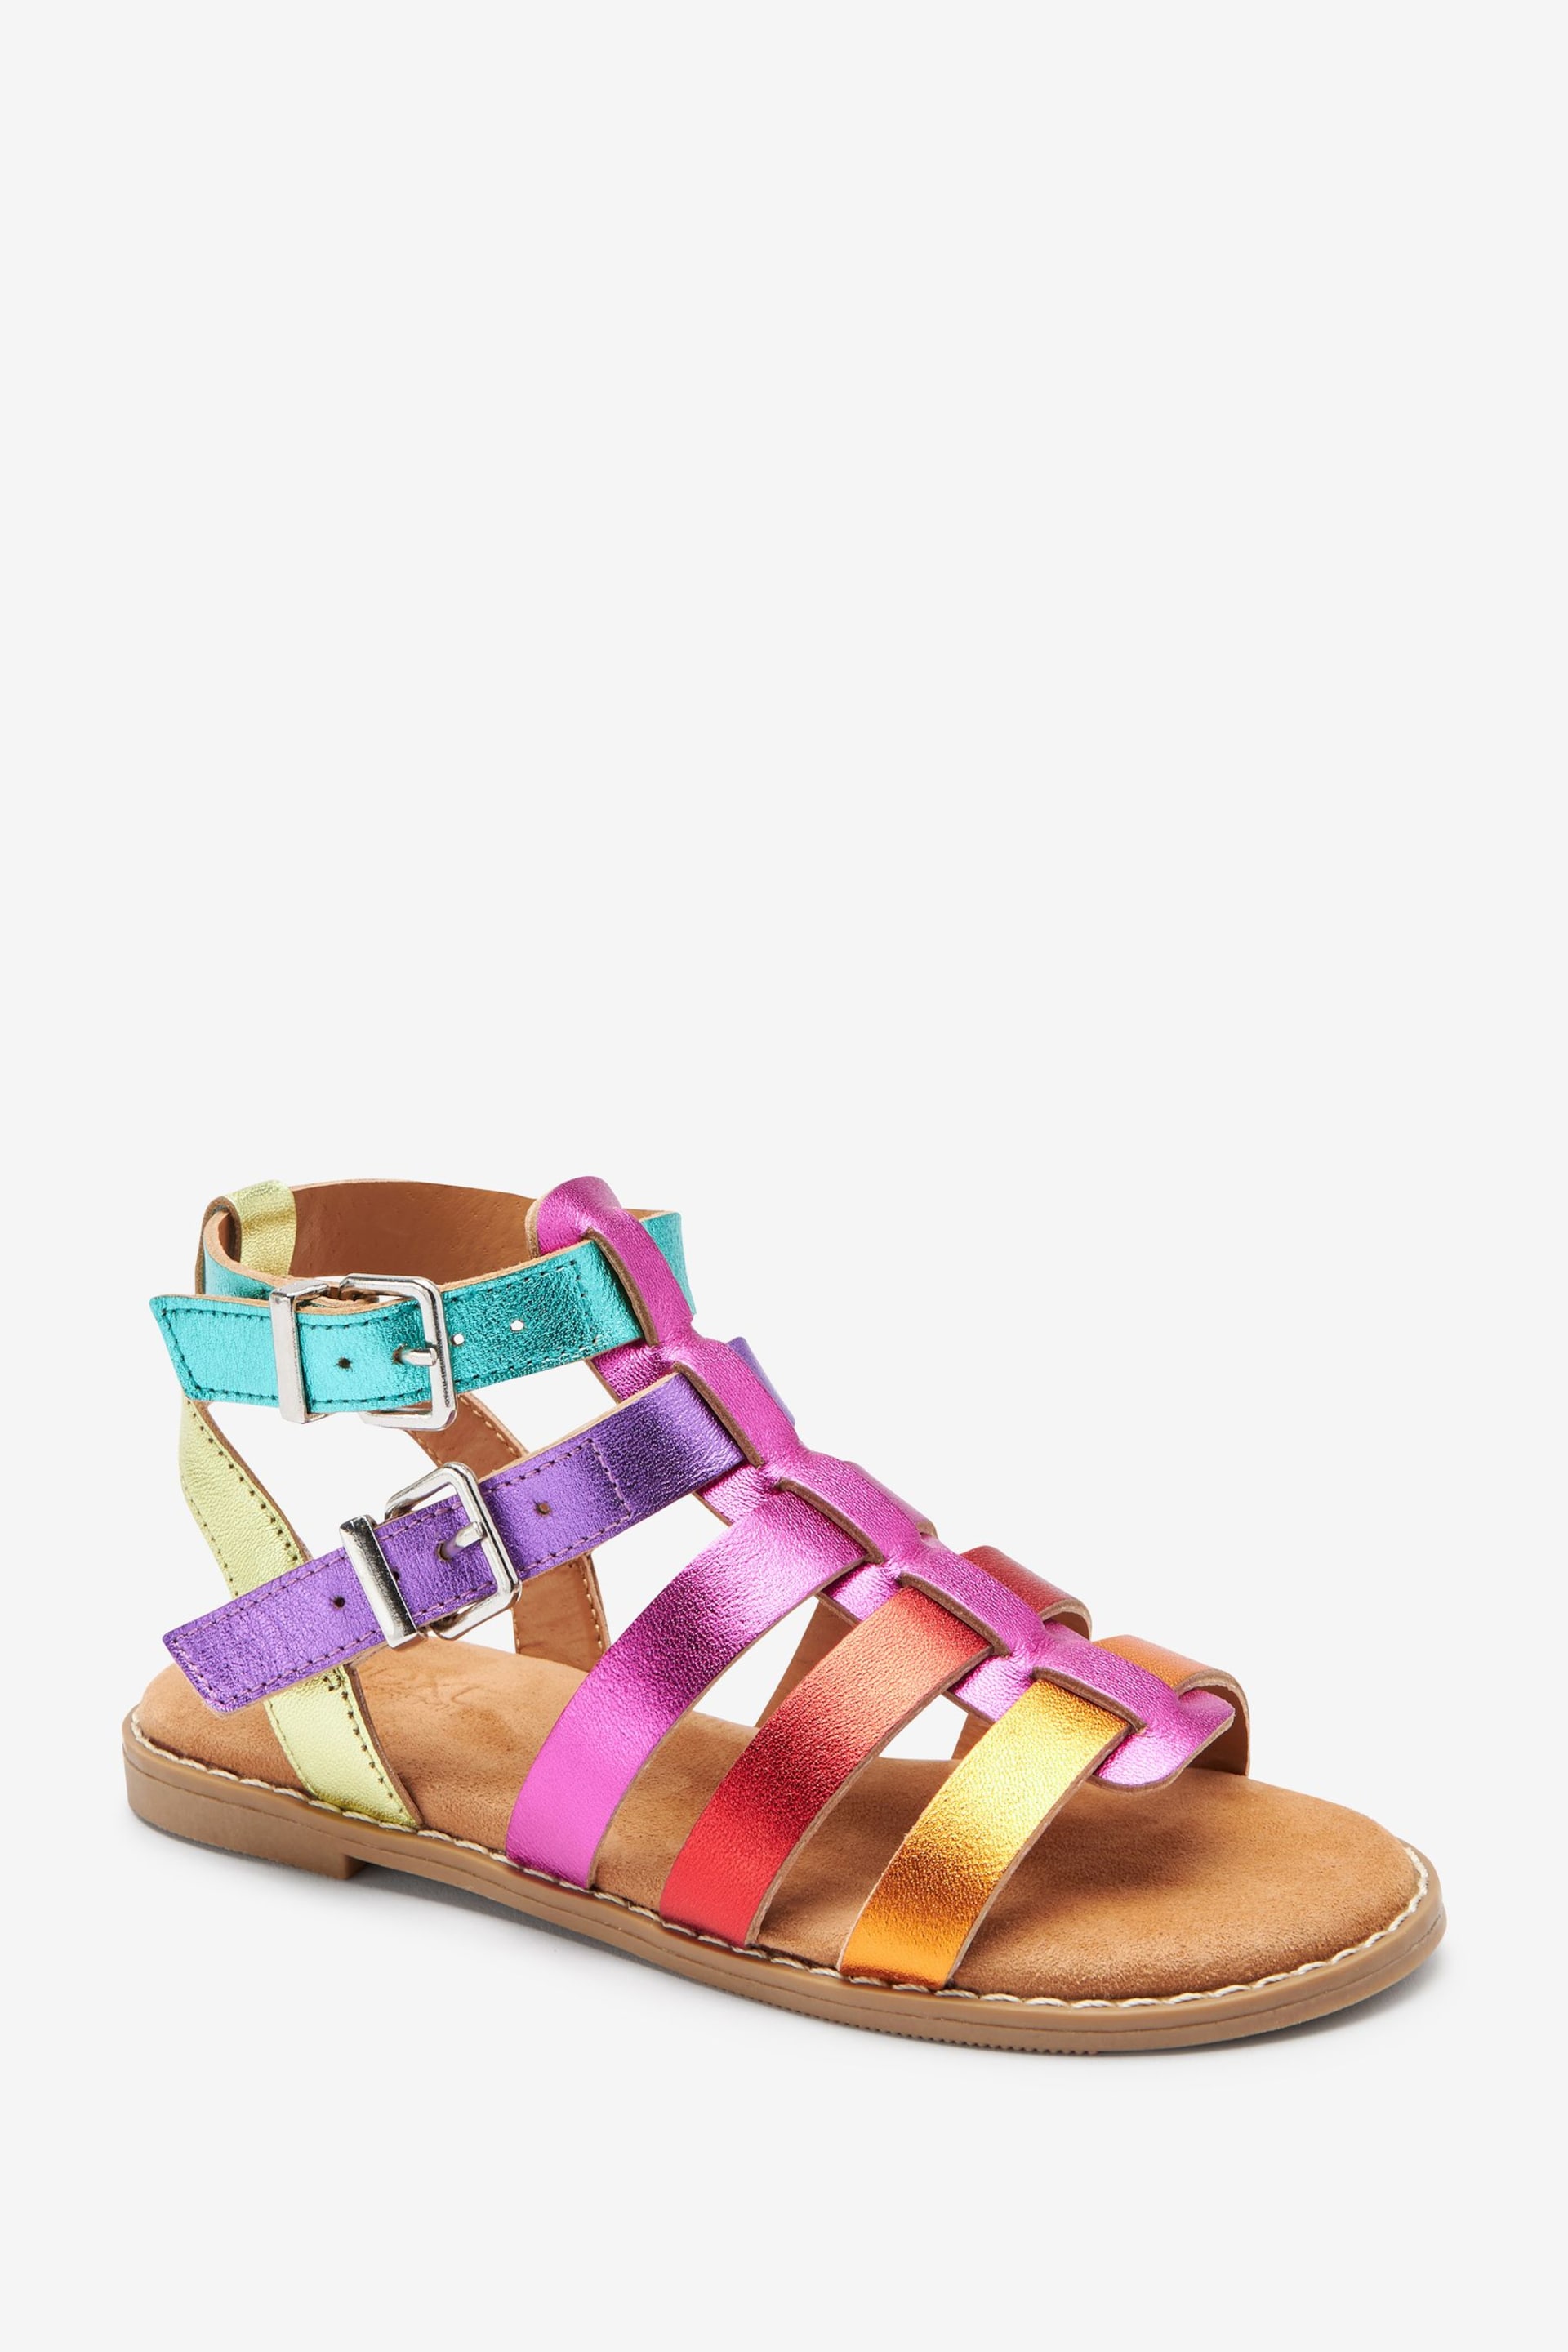 Rainbow Leather Gladiator Sandals - Image 3 of 8